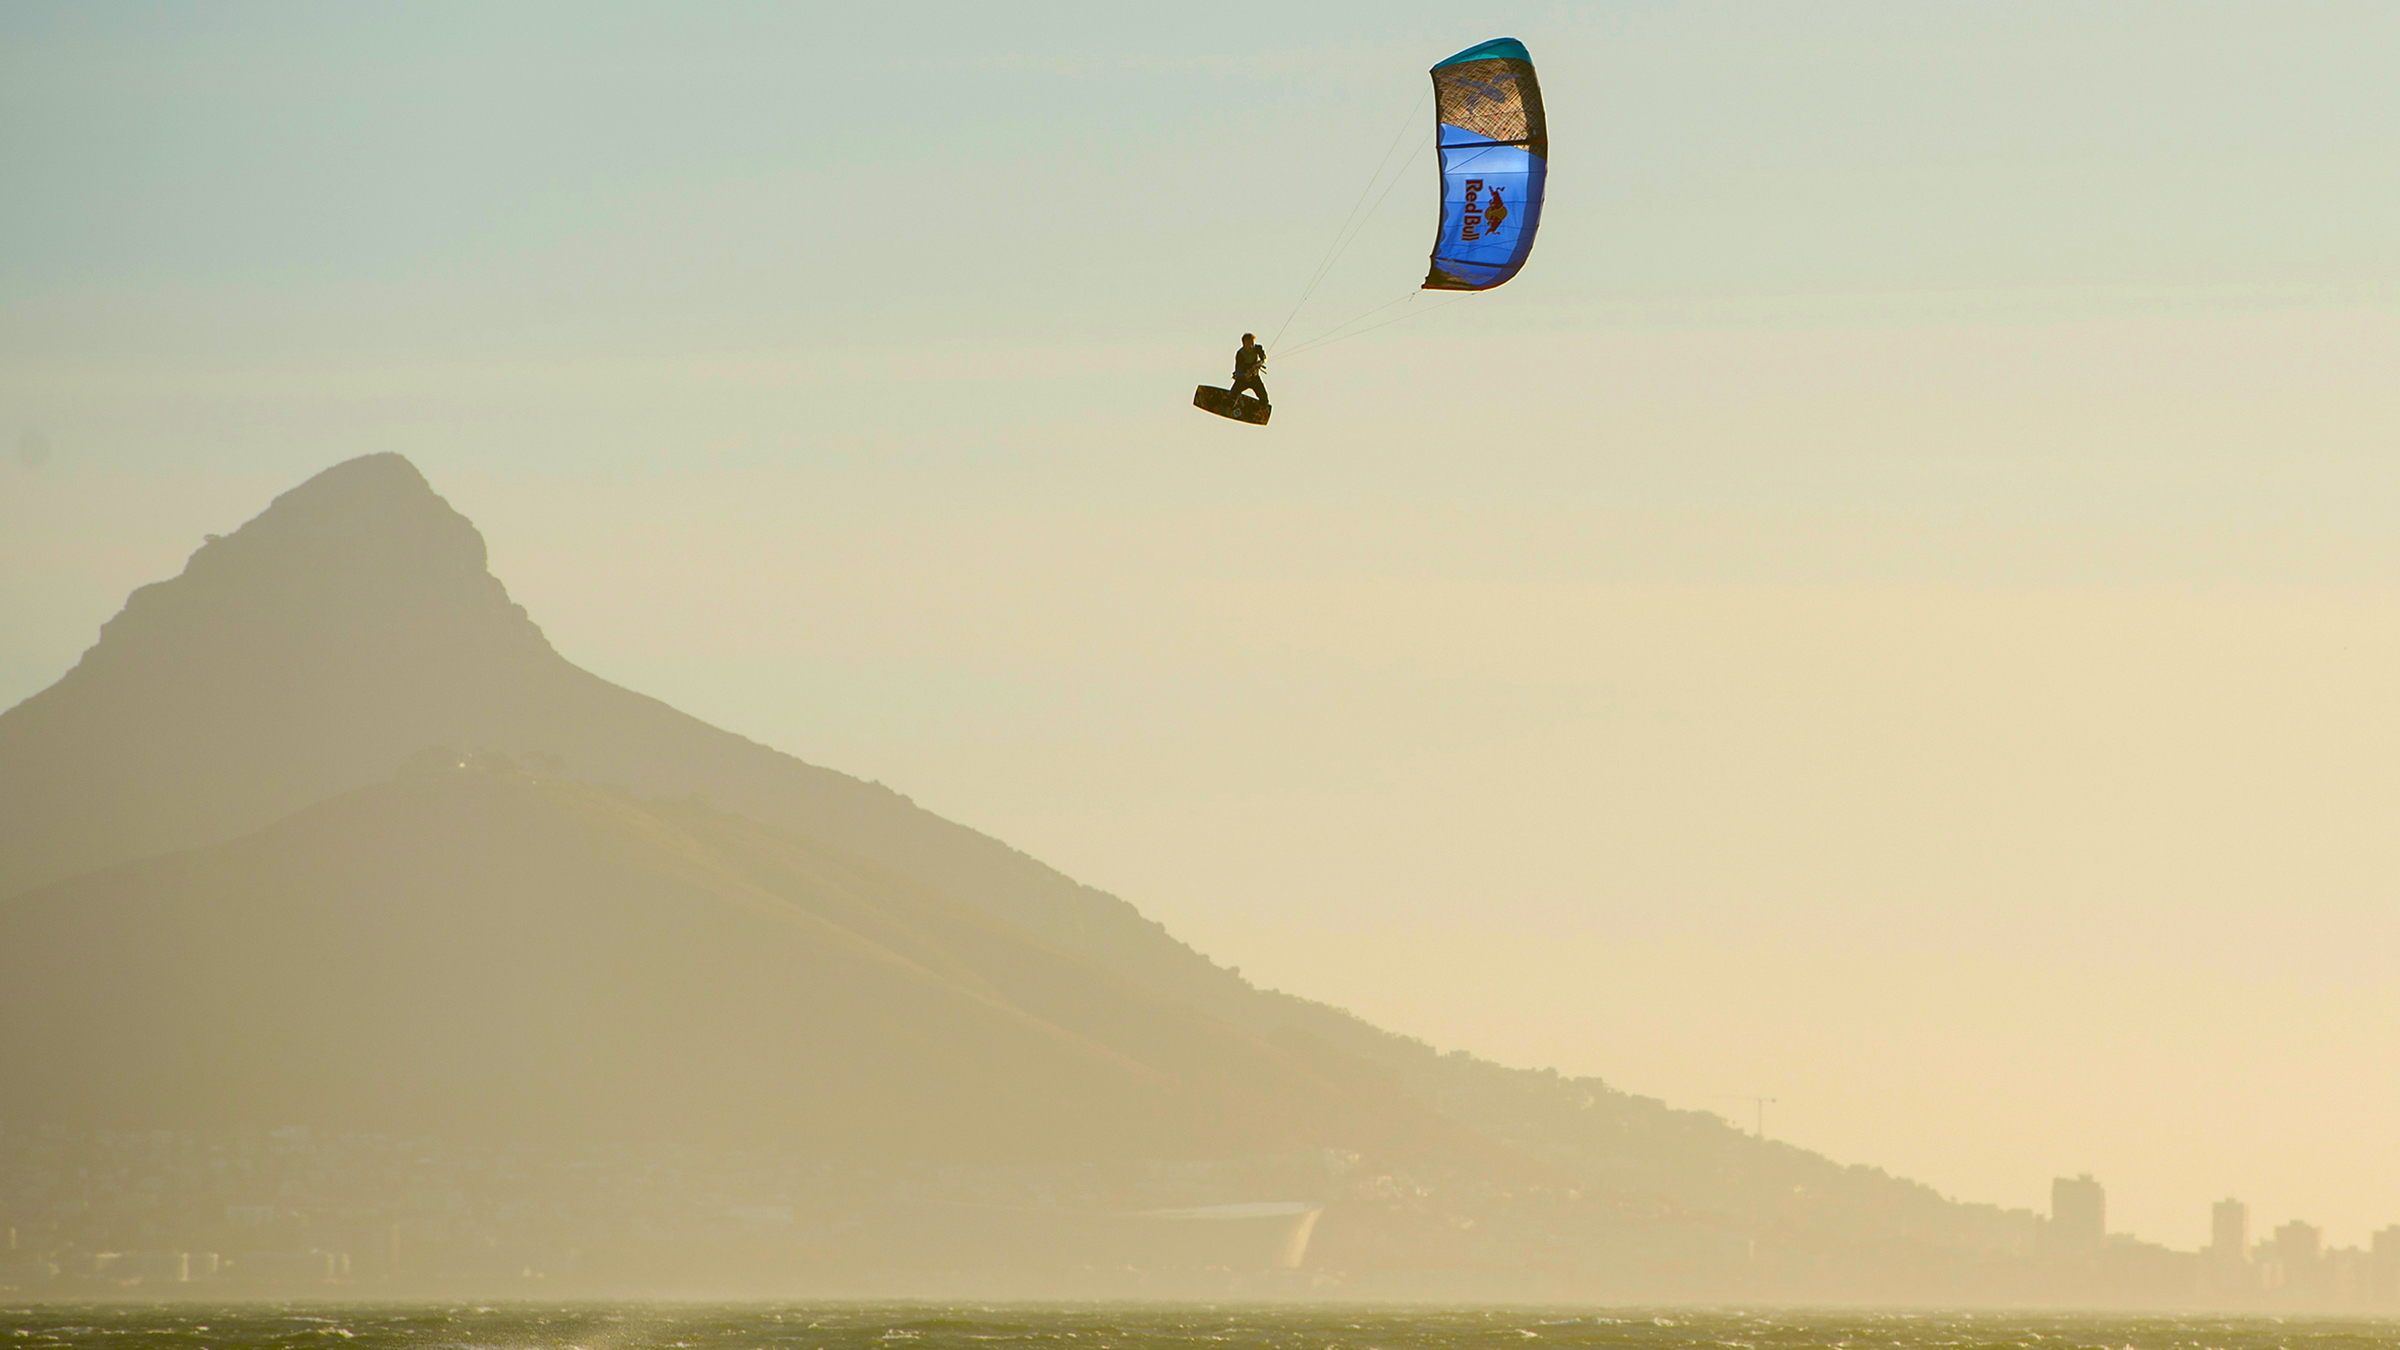 kitesurf wallpaper image - Ruben Lenten on the Best Extract in Cape Town - kitesurf megaloop jump - in resolution: High Definition - HD 16:9 2400 X 1350